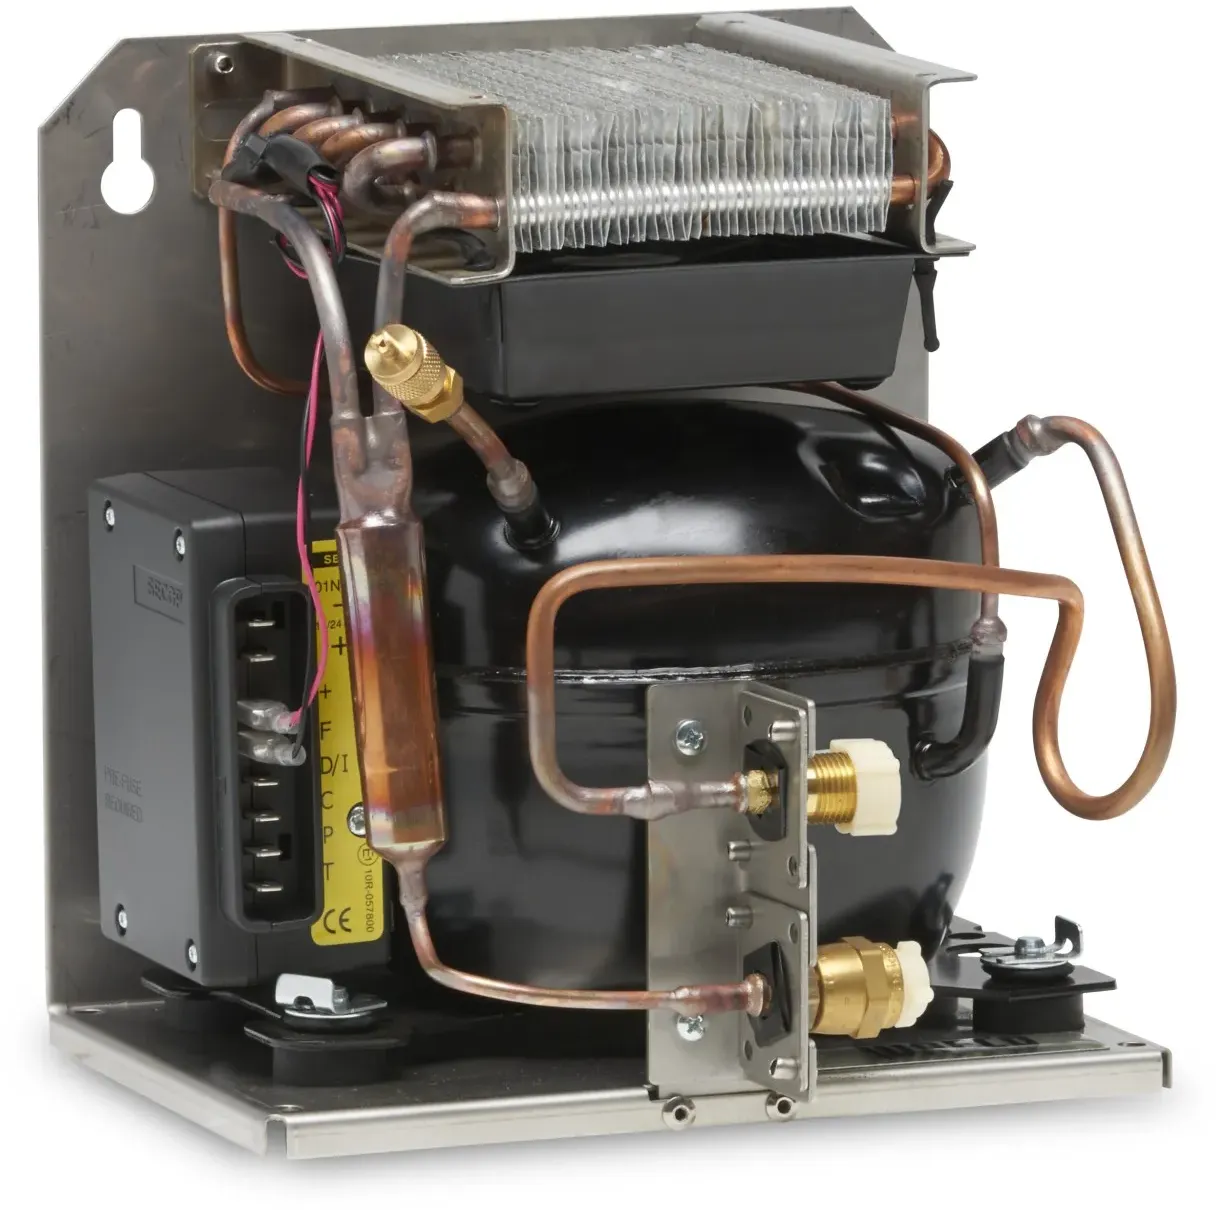 Dometic CU86 Kühlsystem: Hochmoderne Kühltechnologie für jeden Haushalt